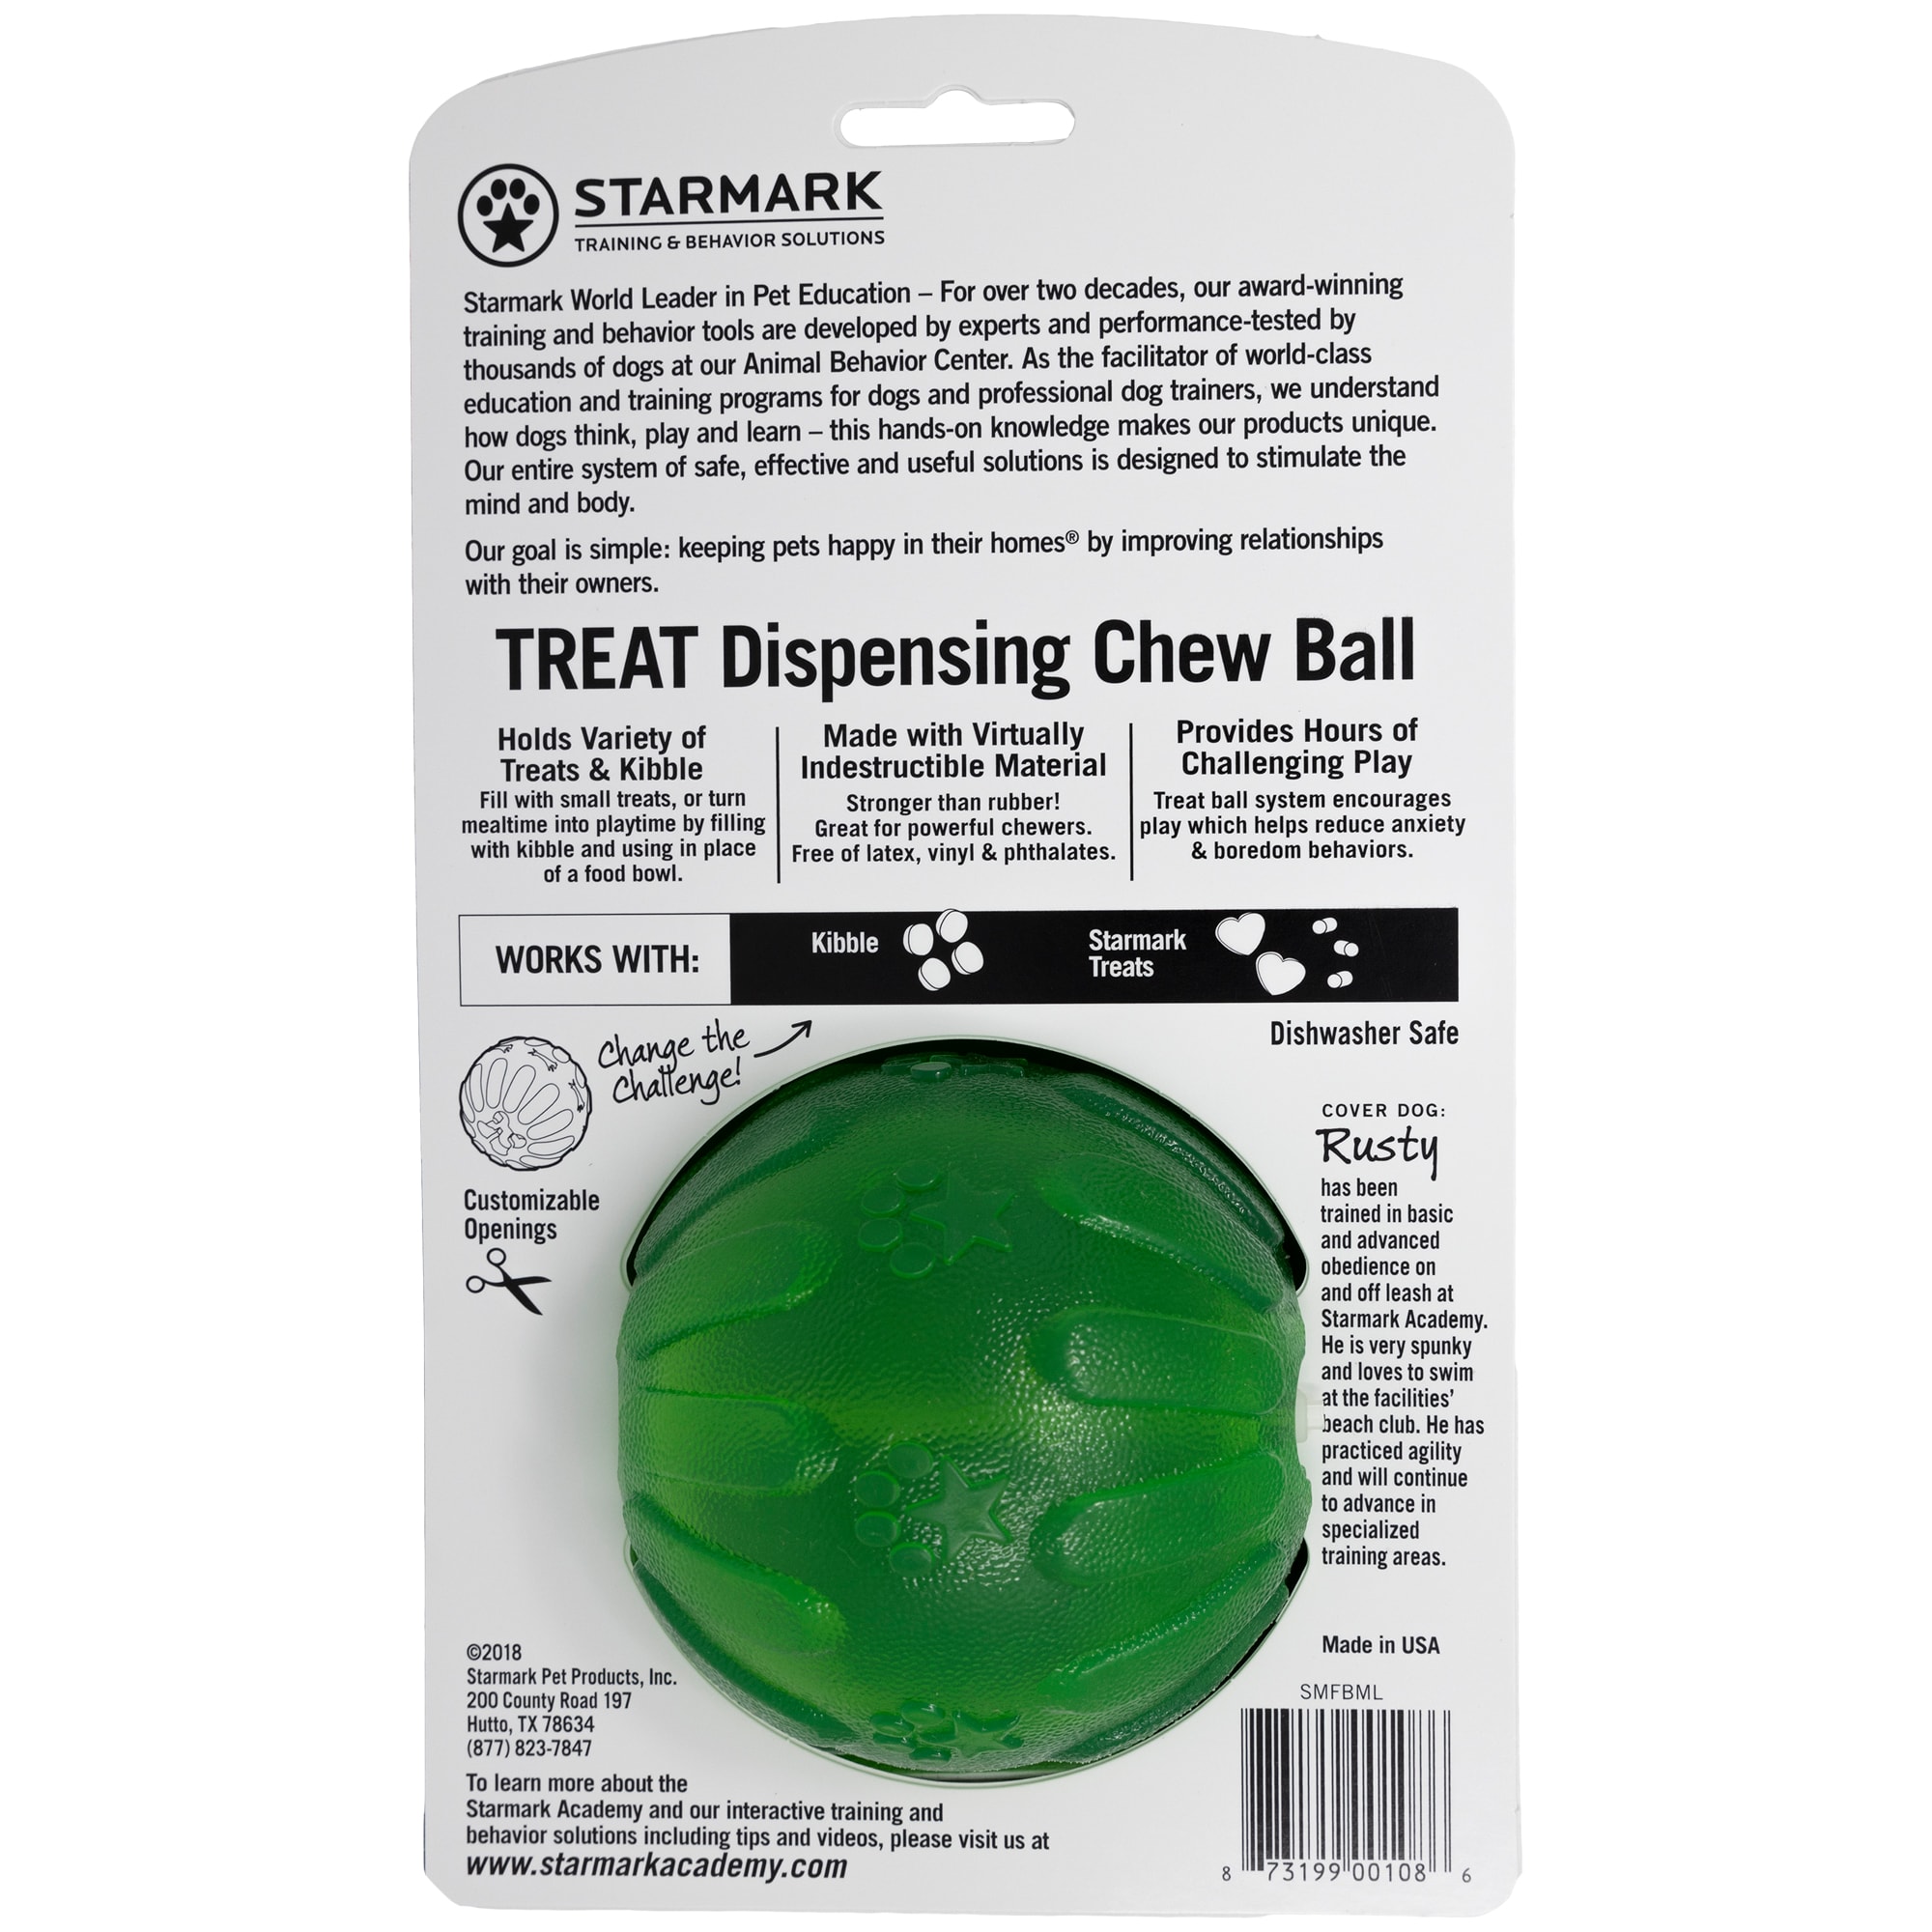 STARMARK Everlasting Treat Ball Tough Dog Chew Toy, Large 